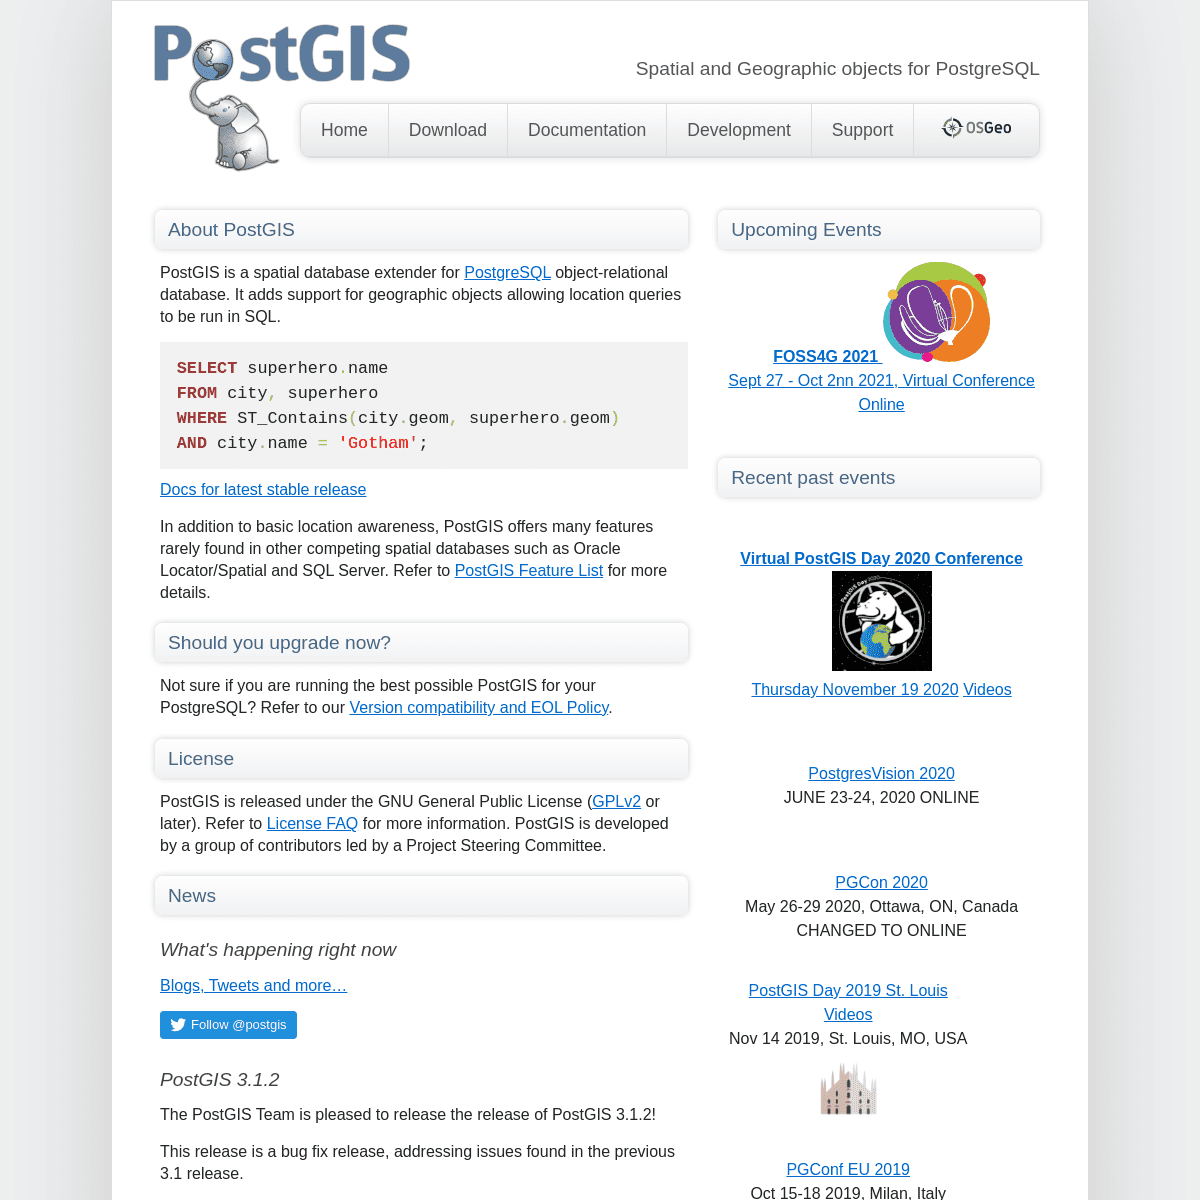 A complete backup of https://postgis.net